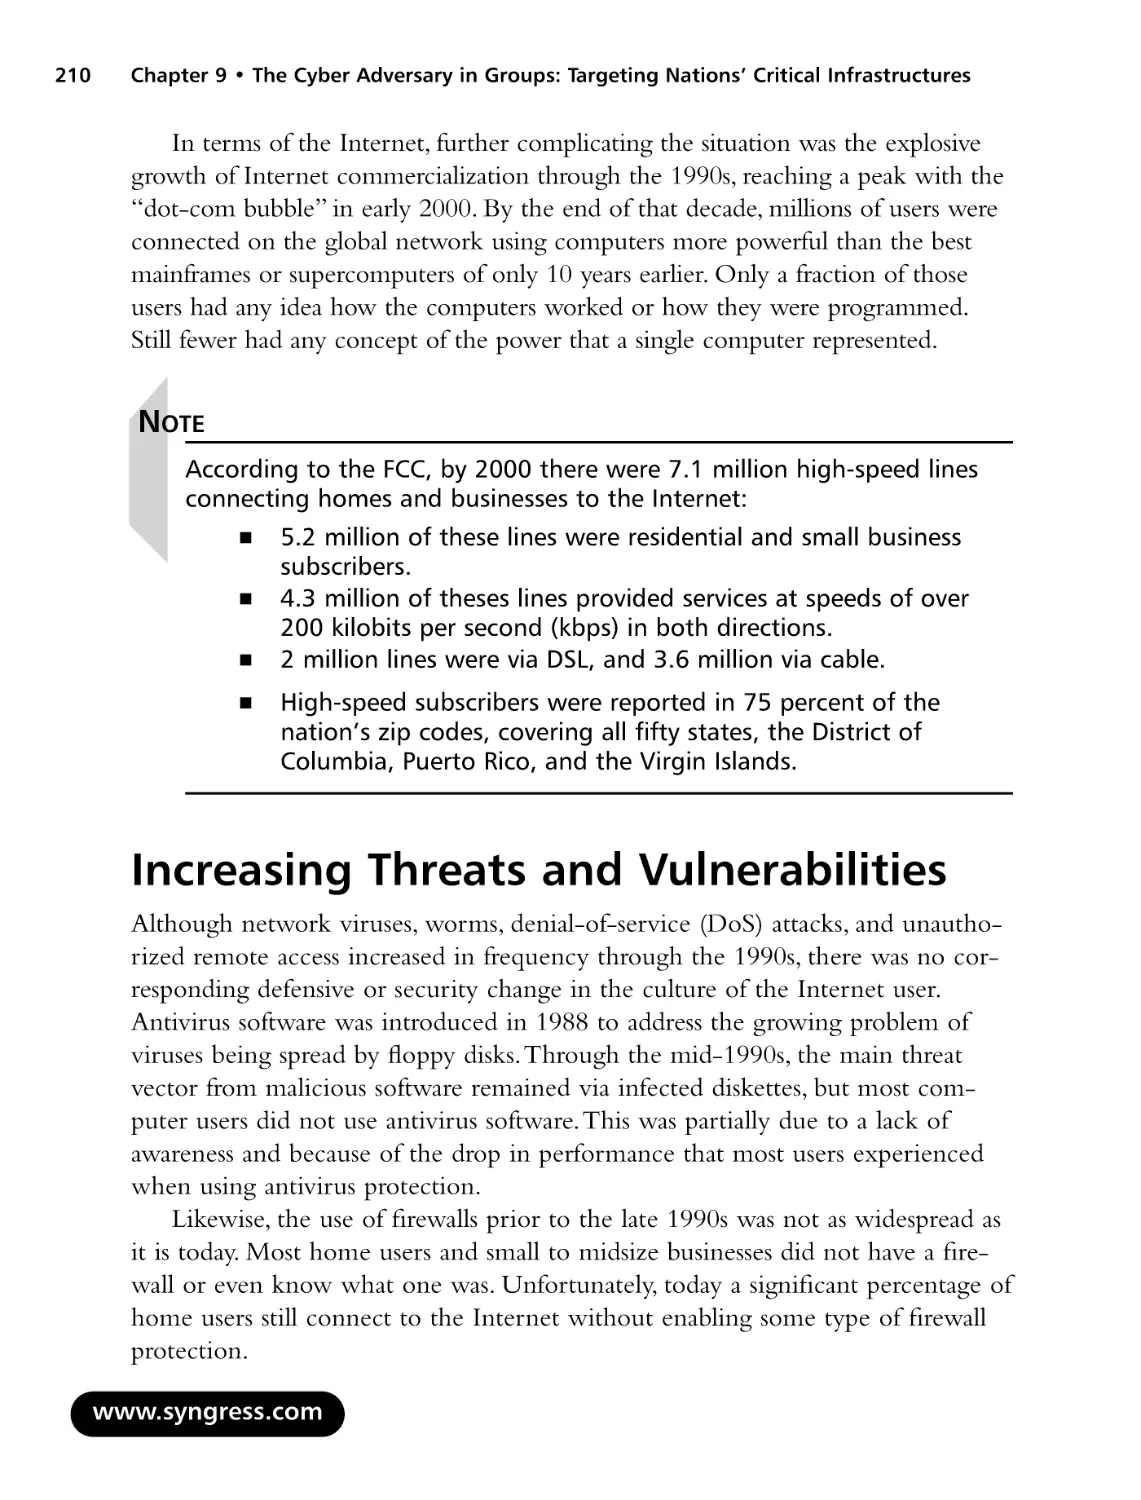 Increasing Threats and Vulnerabilities